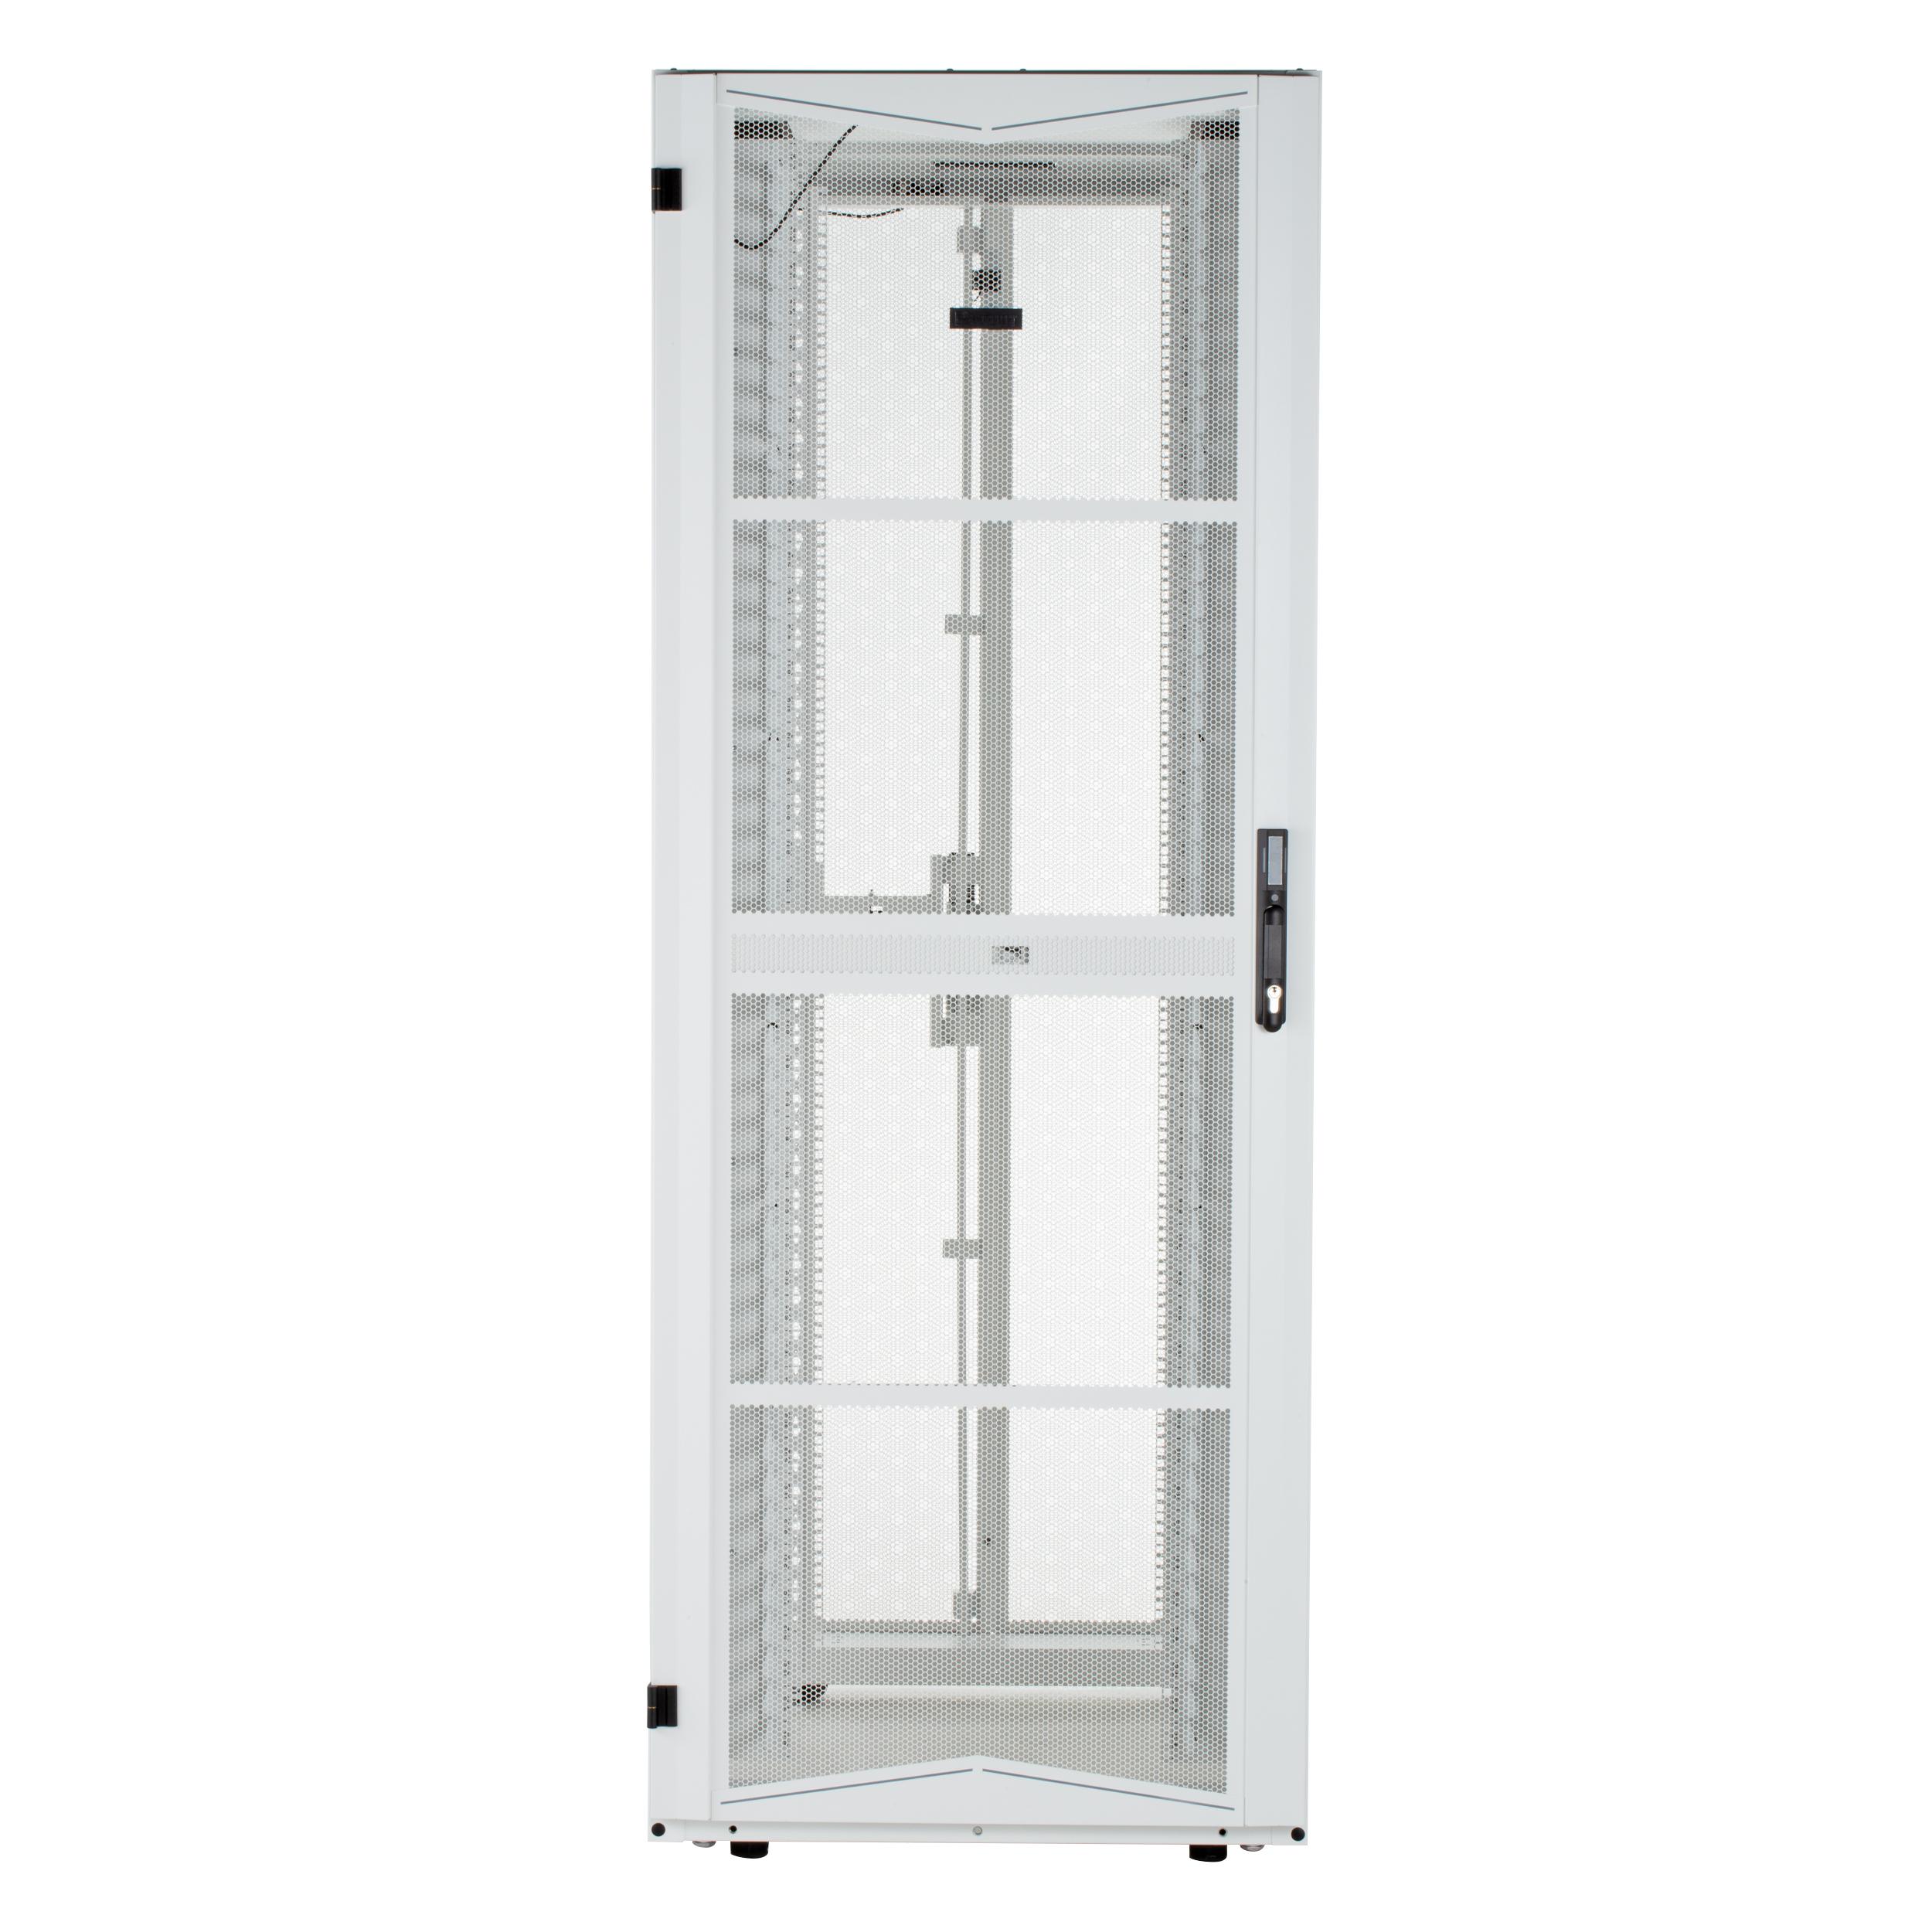 Panduit XG74212WS0001 FlexFusion Cabinet, 700mm x 42RU x 1070mm, White